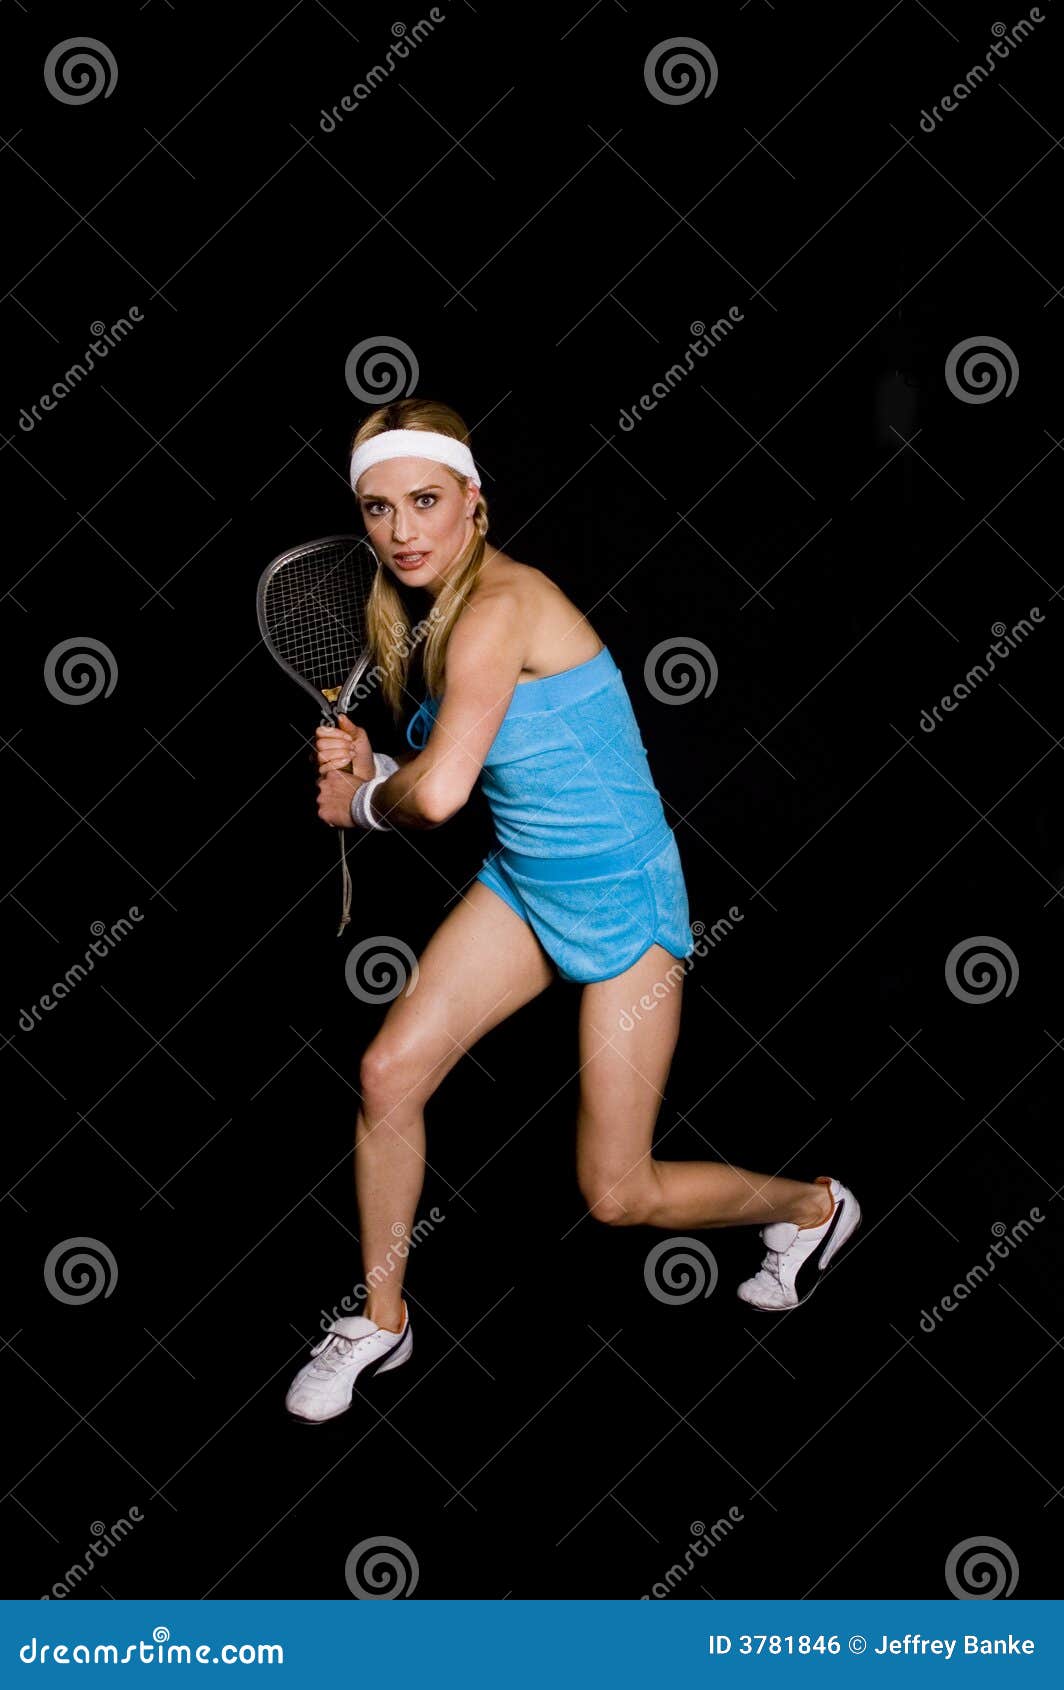 woman playing raquet ball